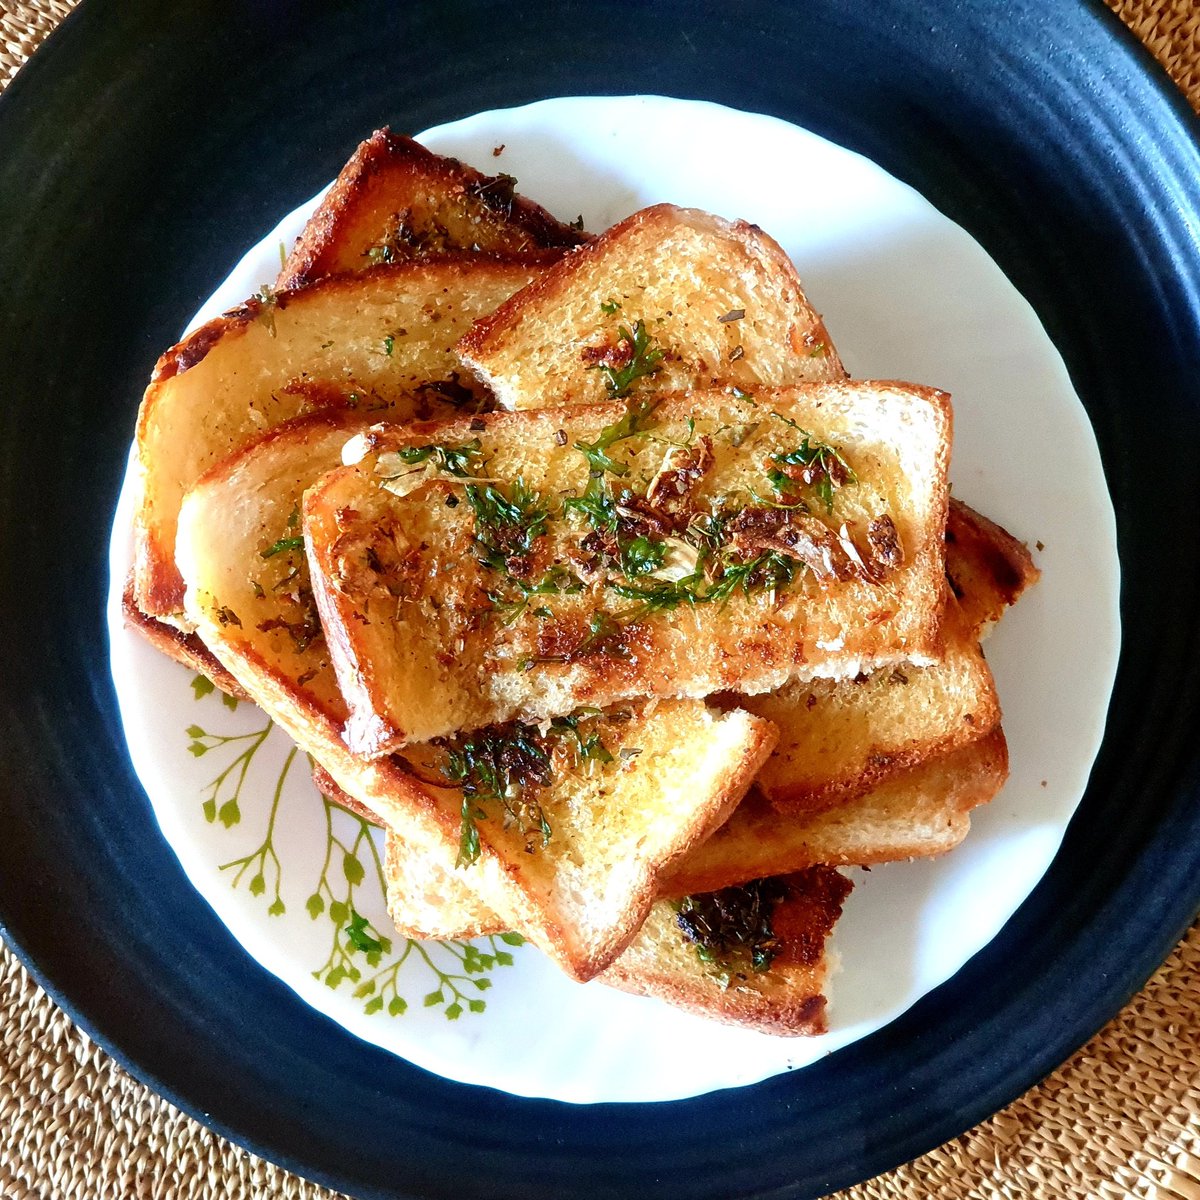 Garlic-Chilli-Toast. 😍
#appetizerideas #Food #BreadSticks #Love #smellsyummy #garlicbread #breadrecipe #justLikeThat #peoplepleaser #Foodies #Homemade